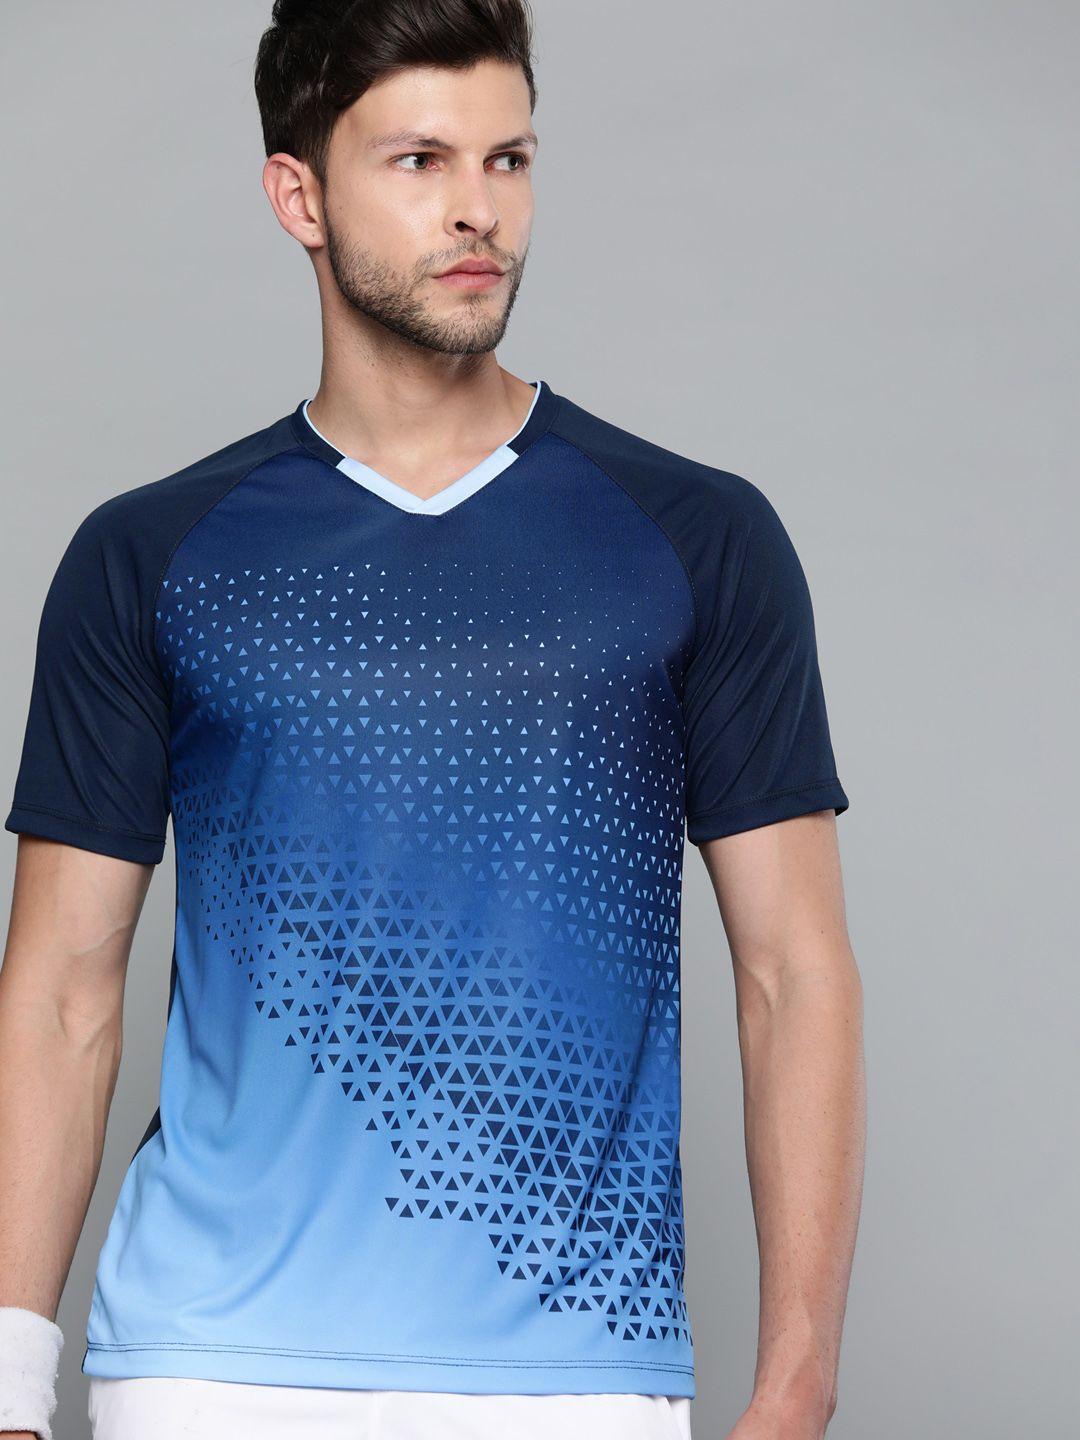 hrx by hrithik roshan racketsport men moonlit ocean rapid-dry abstract tshirts